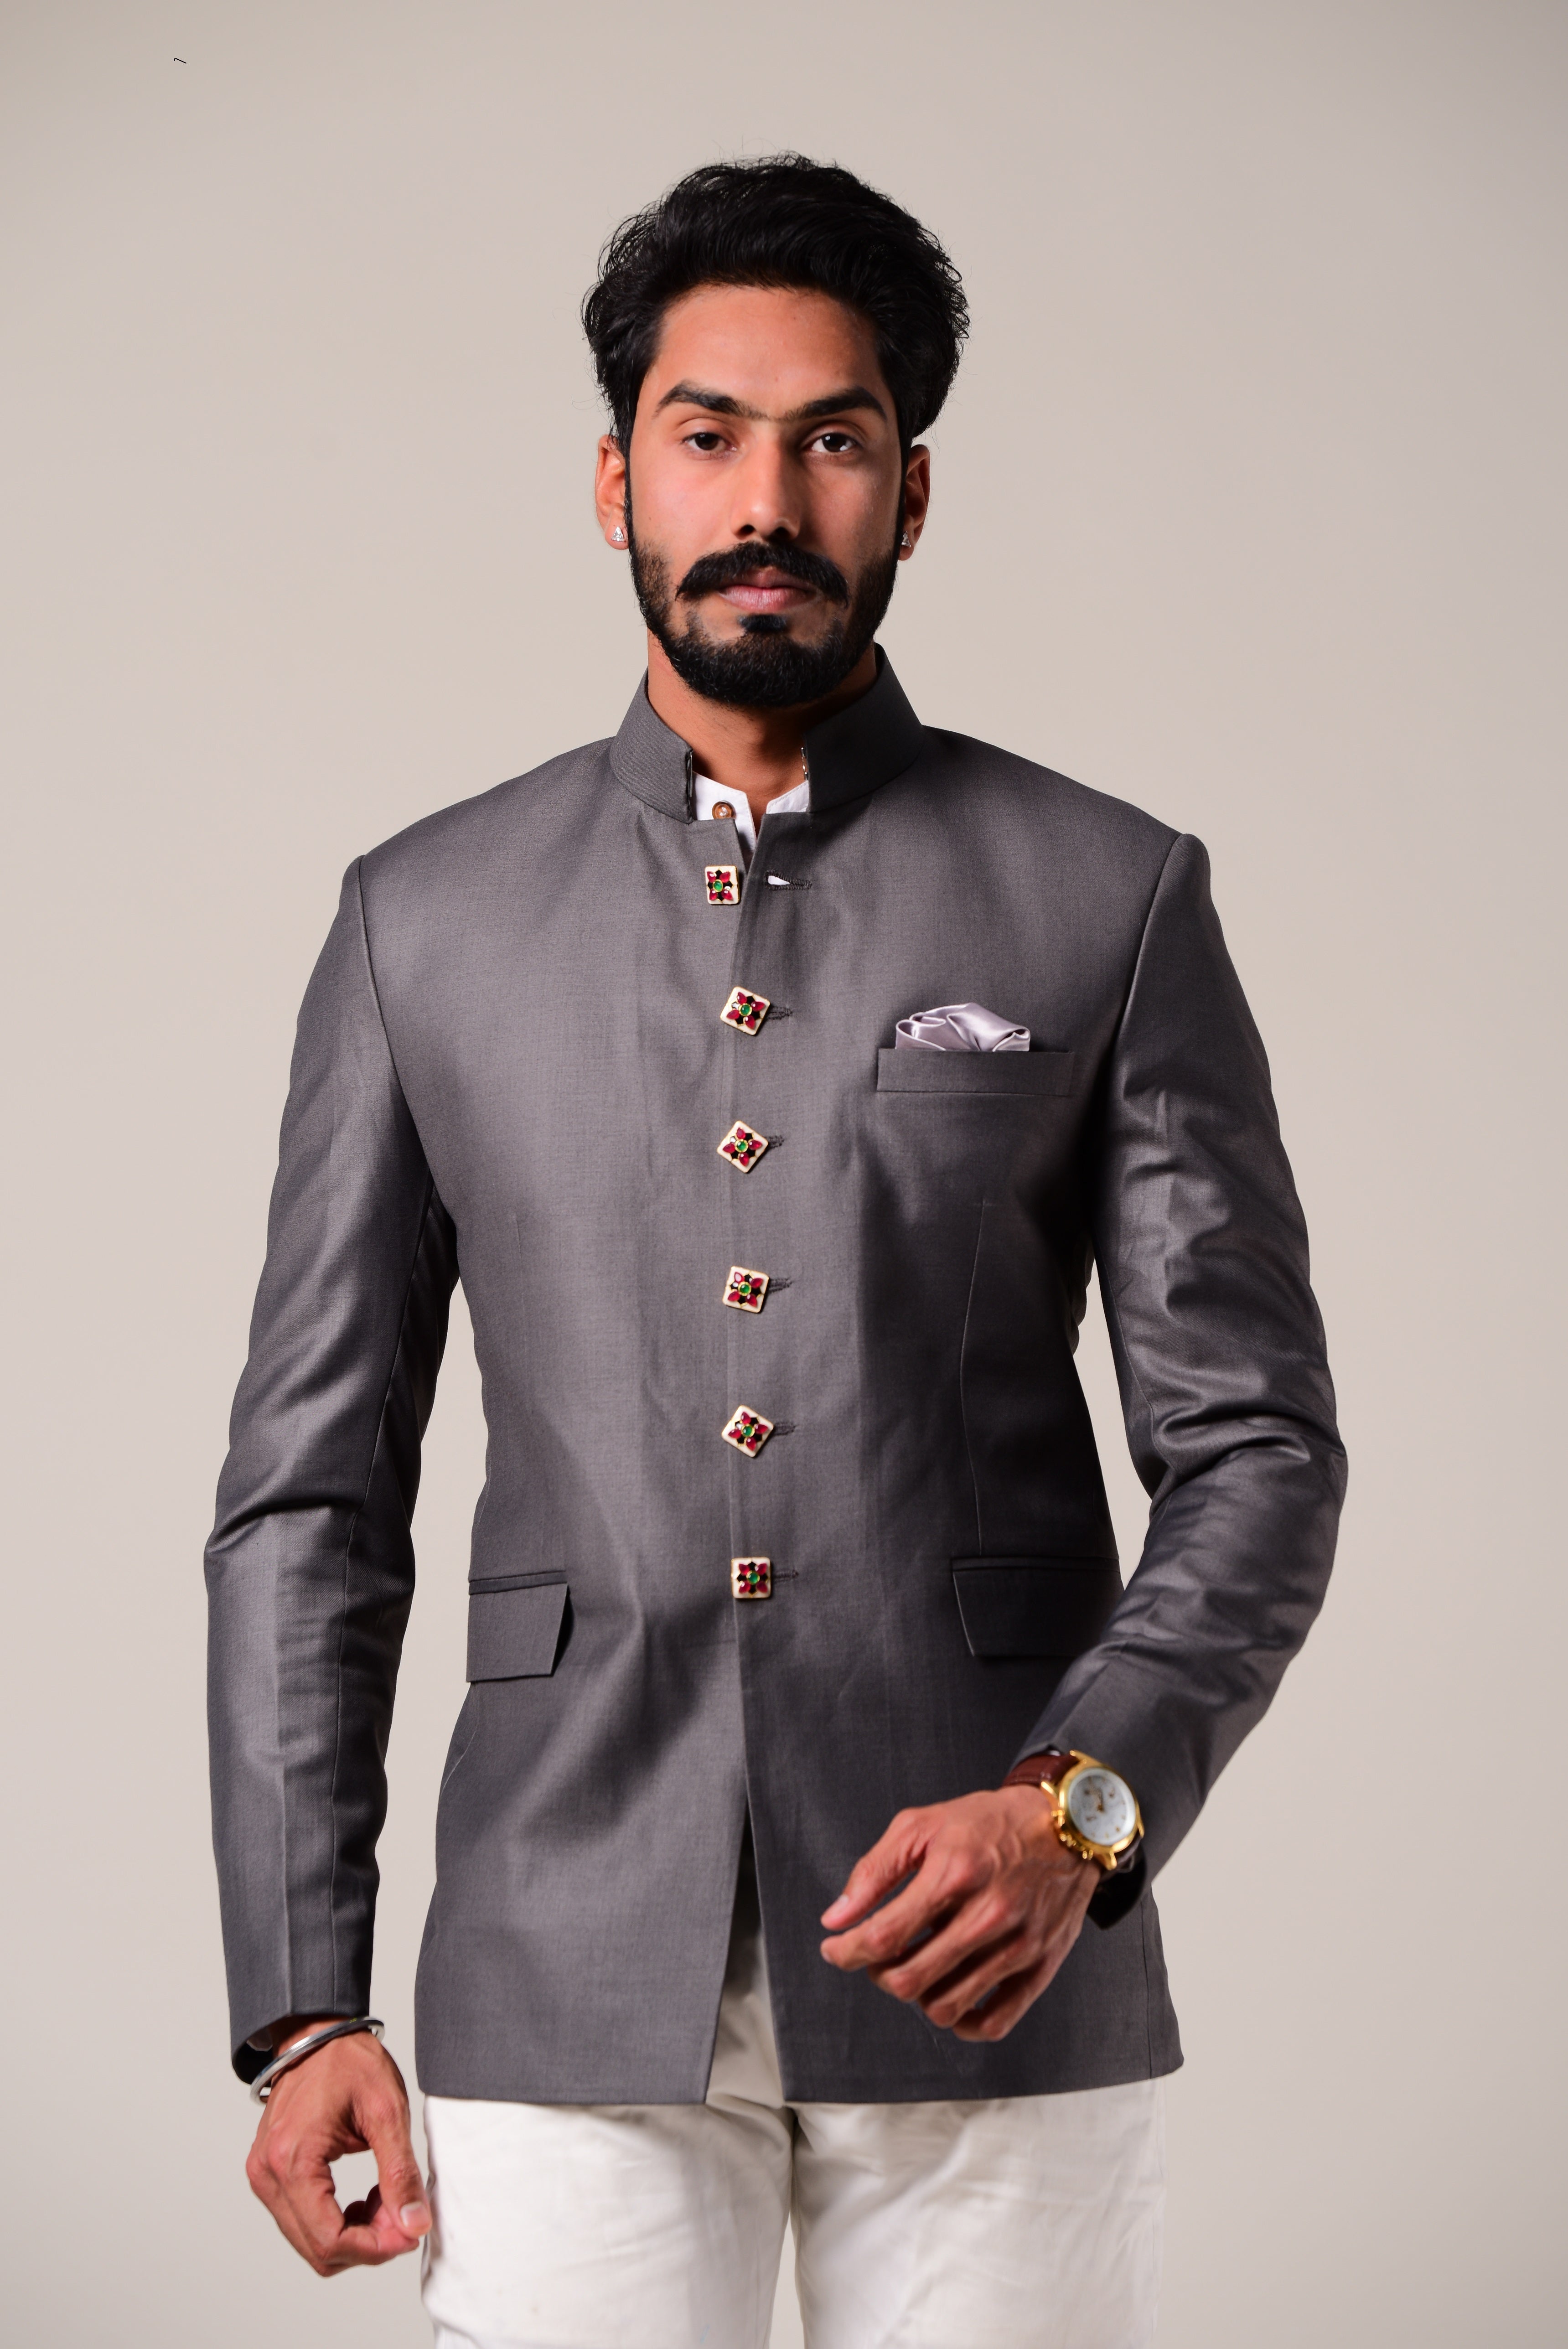 Exclusive Iron Grey Jodhpuri Bandhgala with White Trouser | Perfect for Wedding wear, Festive wear, Functional wear|